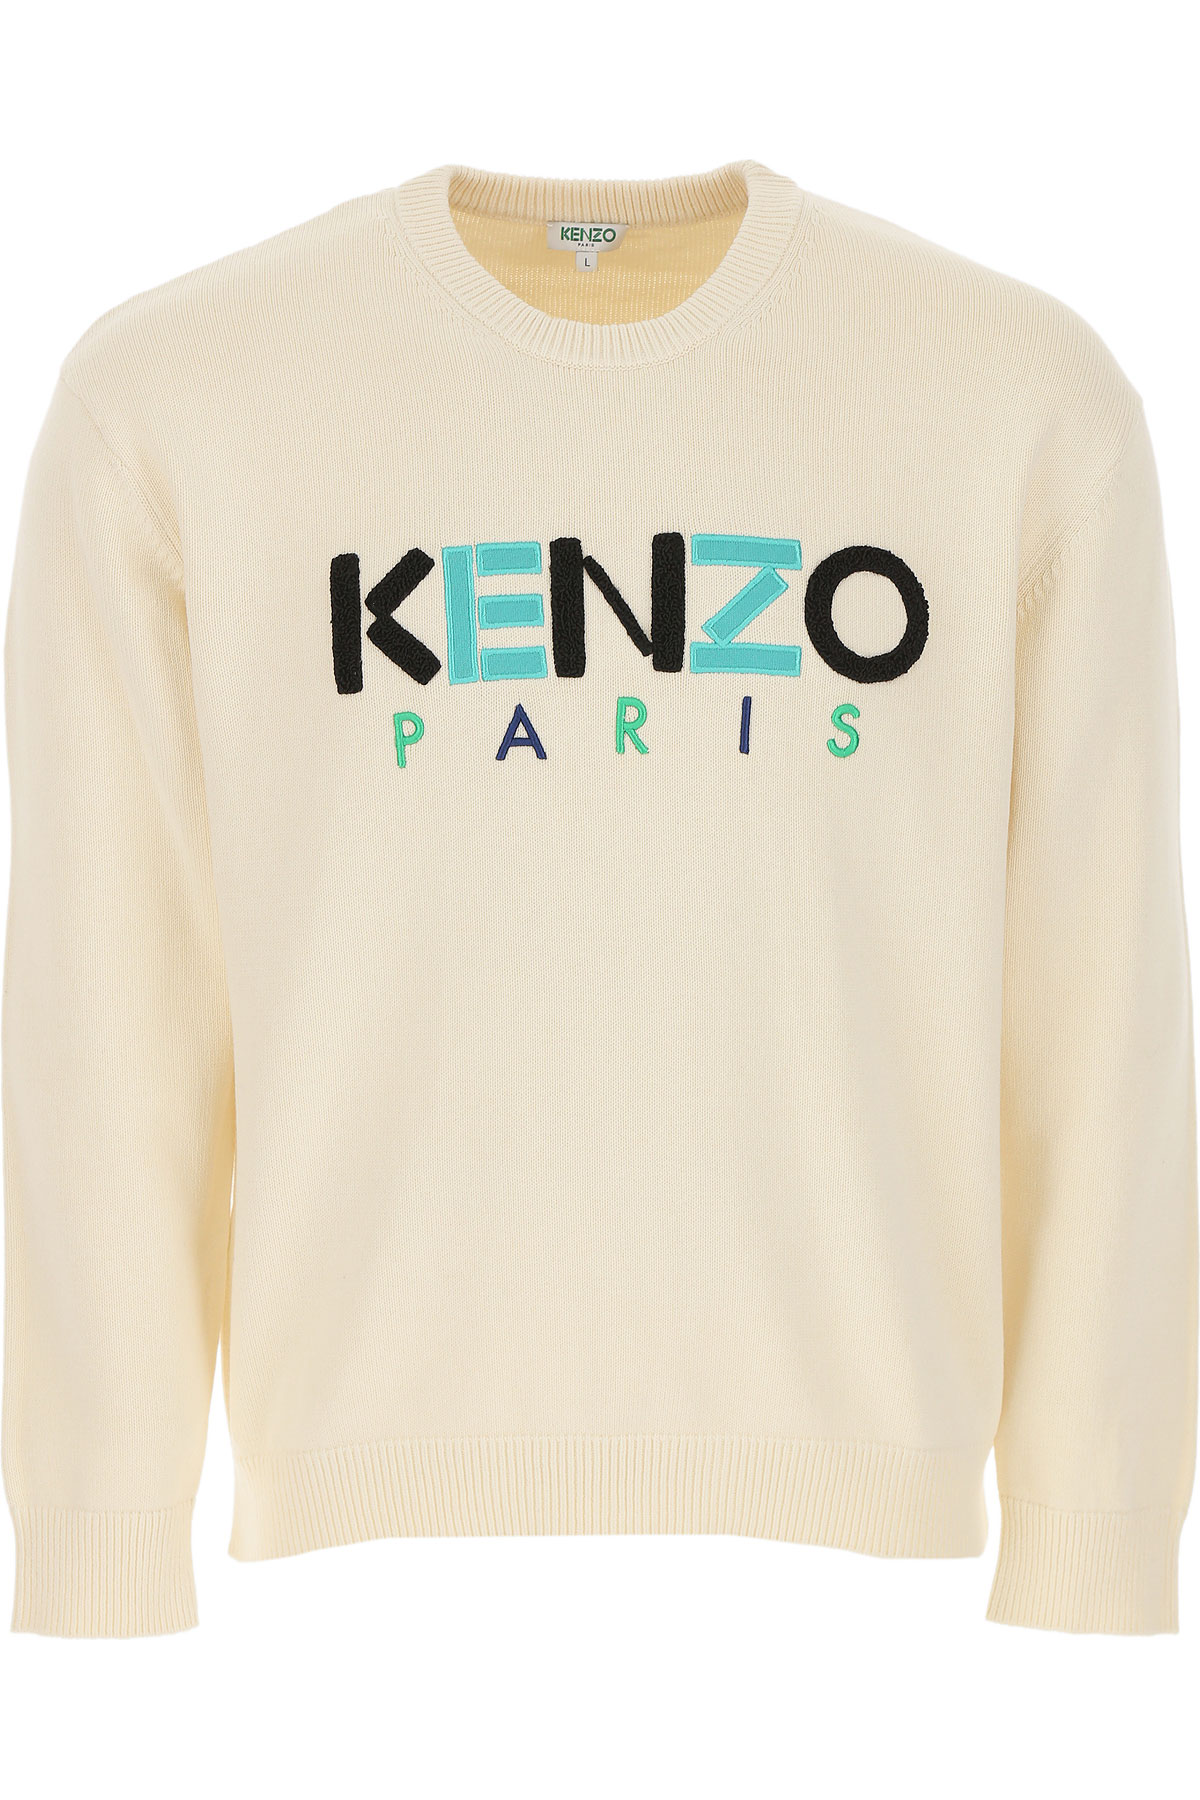 kenzo men's clothing